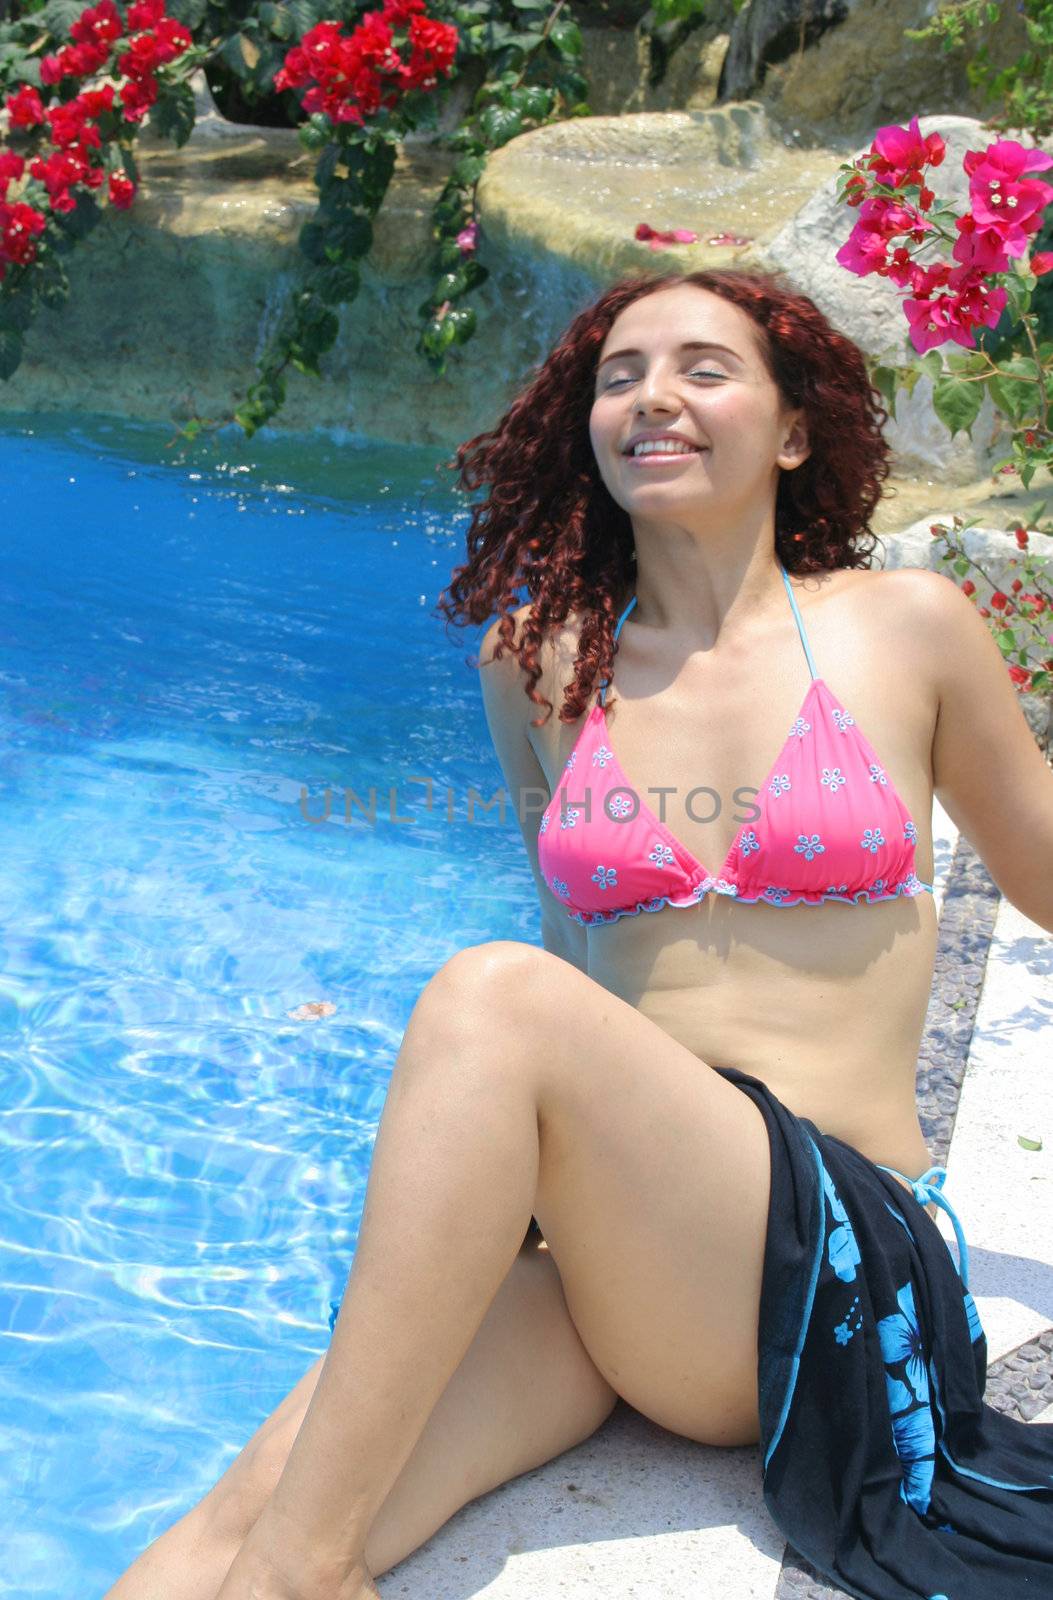 Beautiful youg woman poolside enjoying cool water and sunshine